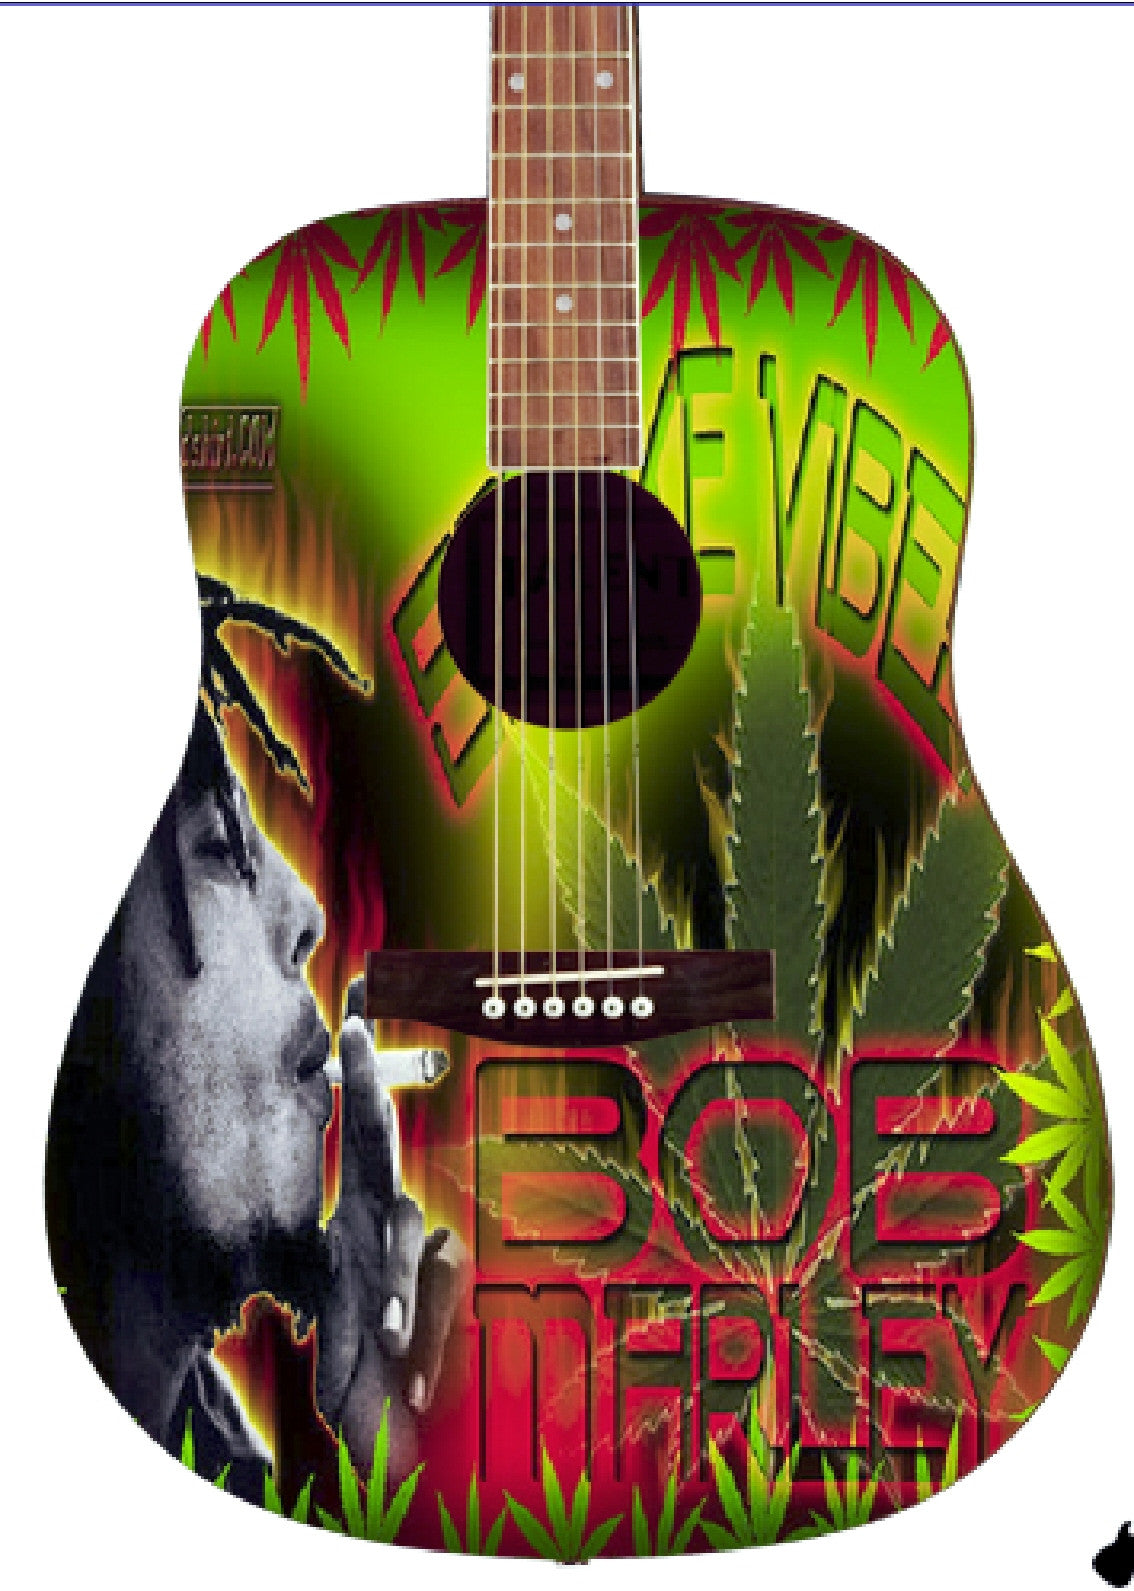 Bob Marley Custom Guitar - Zion Graphic Collectibles